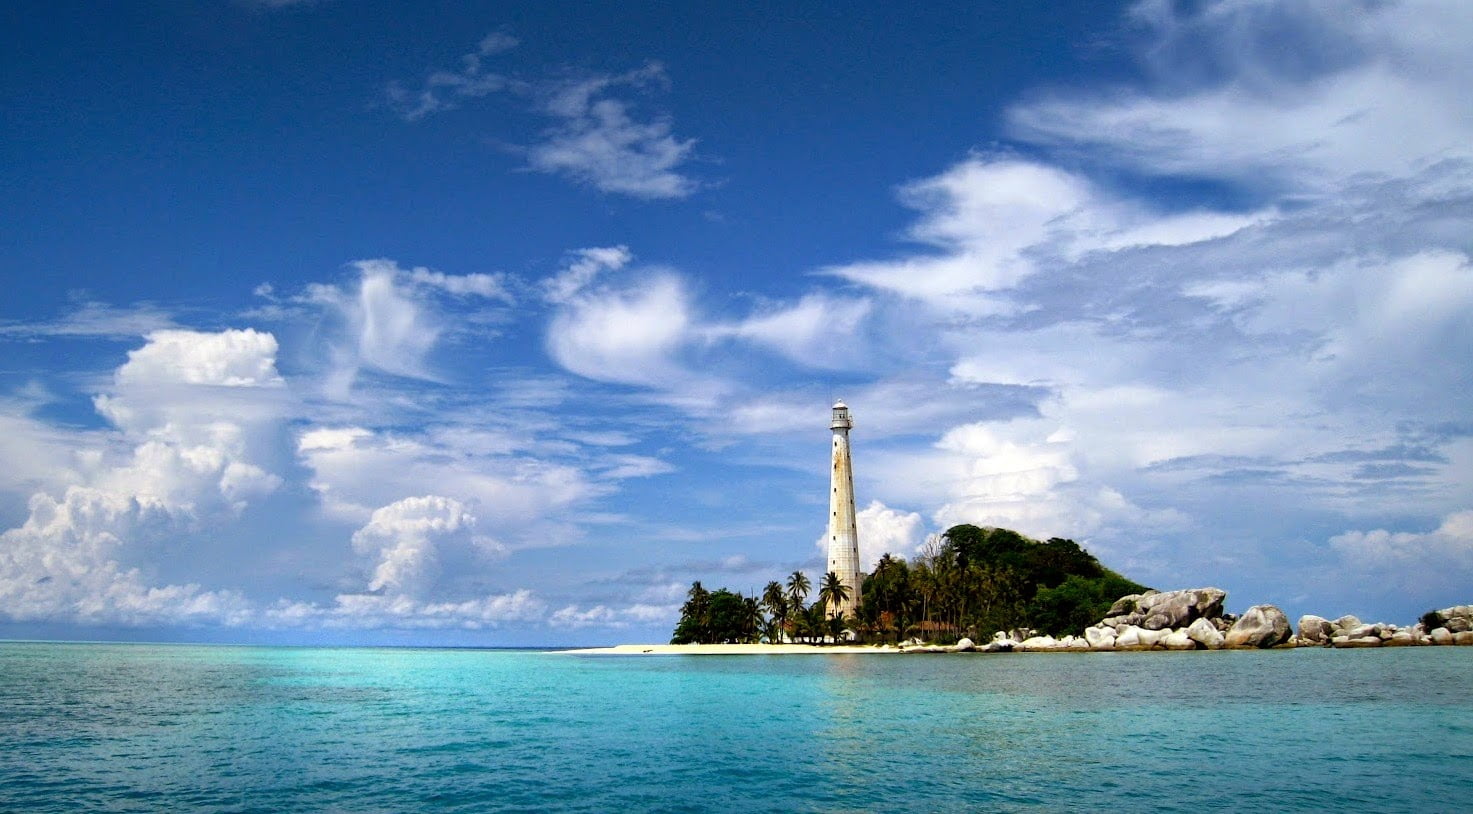 Pulau Lengkuas yang emmiliki menara setinggi 50m